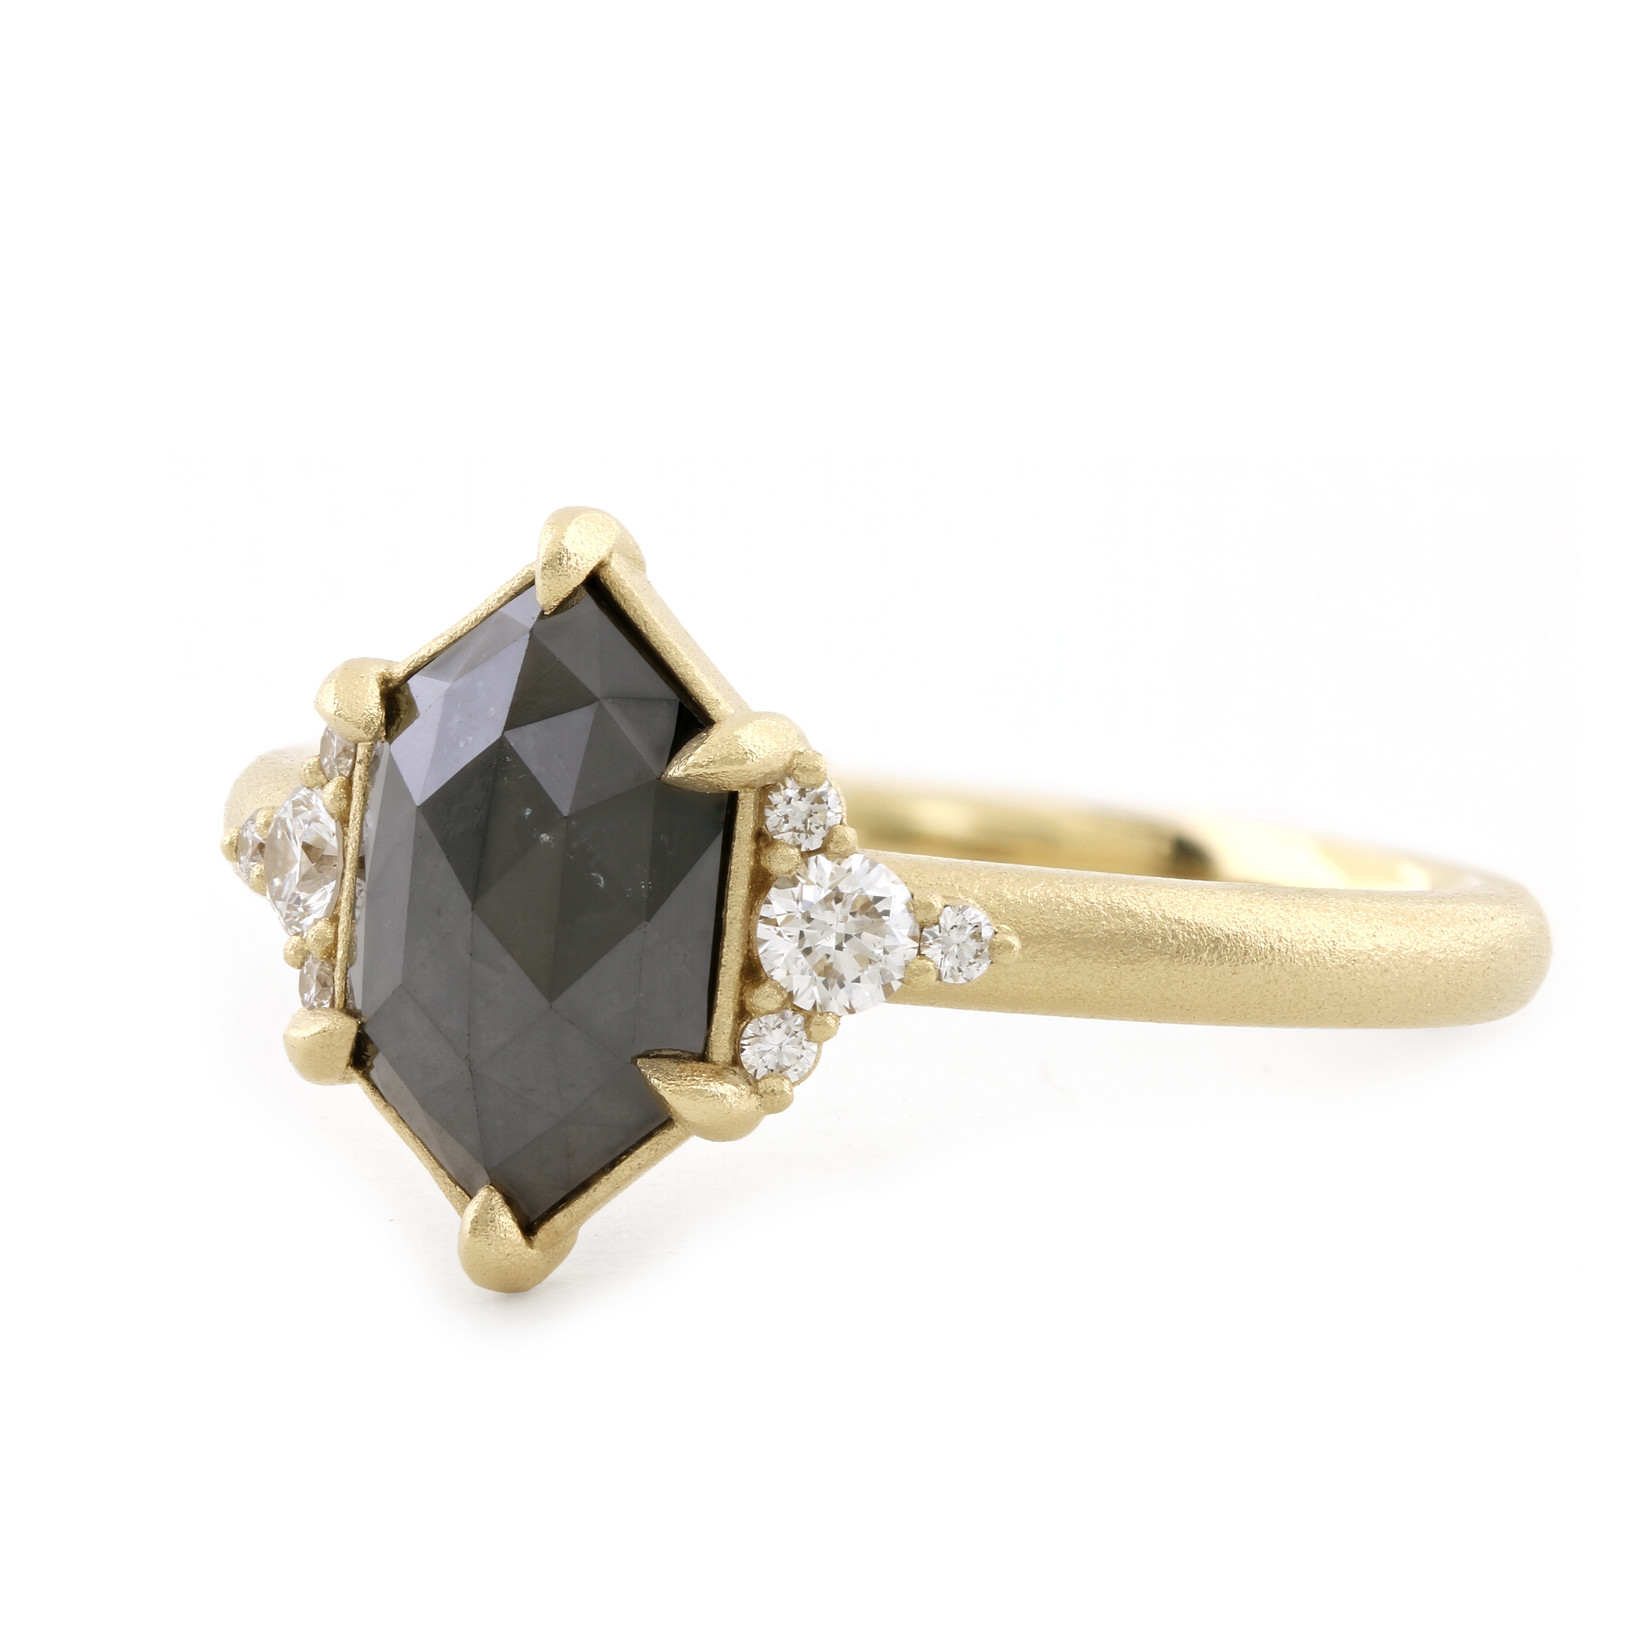 Baxter Moerman Maddie Engagement Ring with Black Diamond